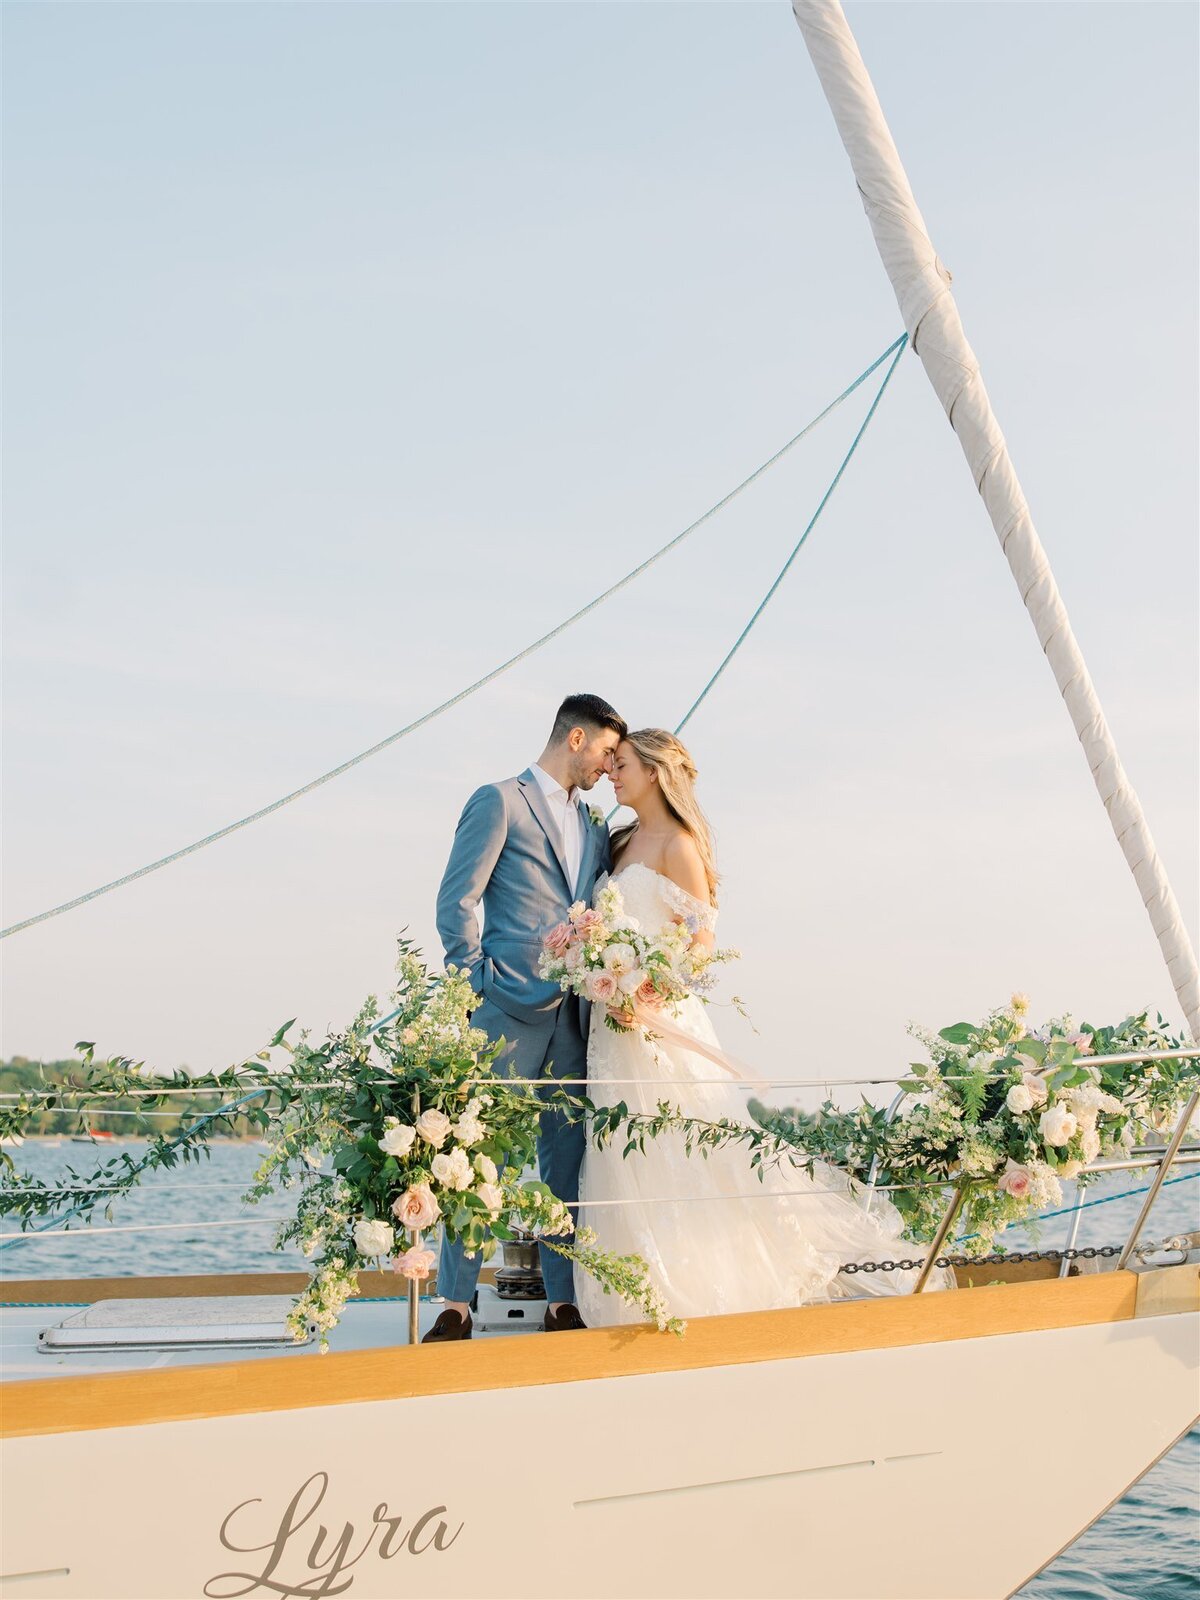 Kate-Murtaugh-Events-RI-wedding-planner-coastal-Newport-luxury-elopement-floral-installation-sailboat-yacht-sail-RI-greenery